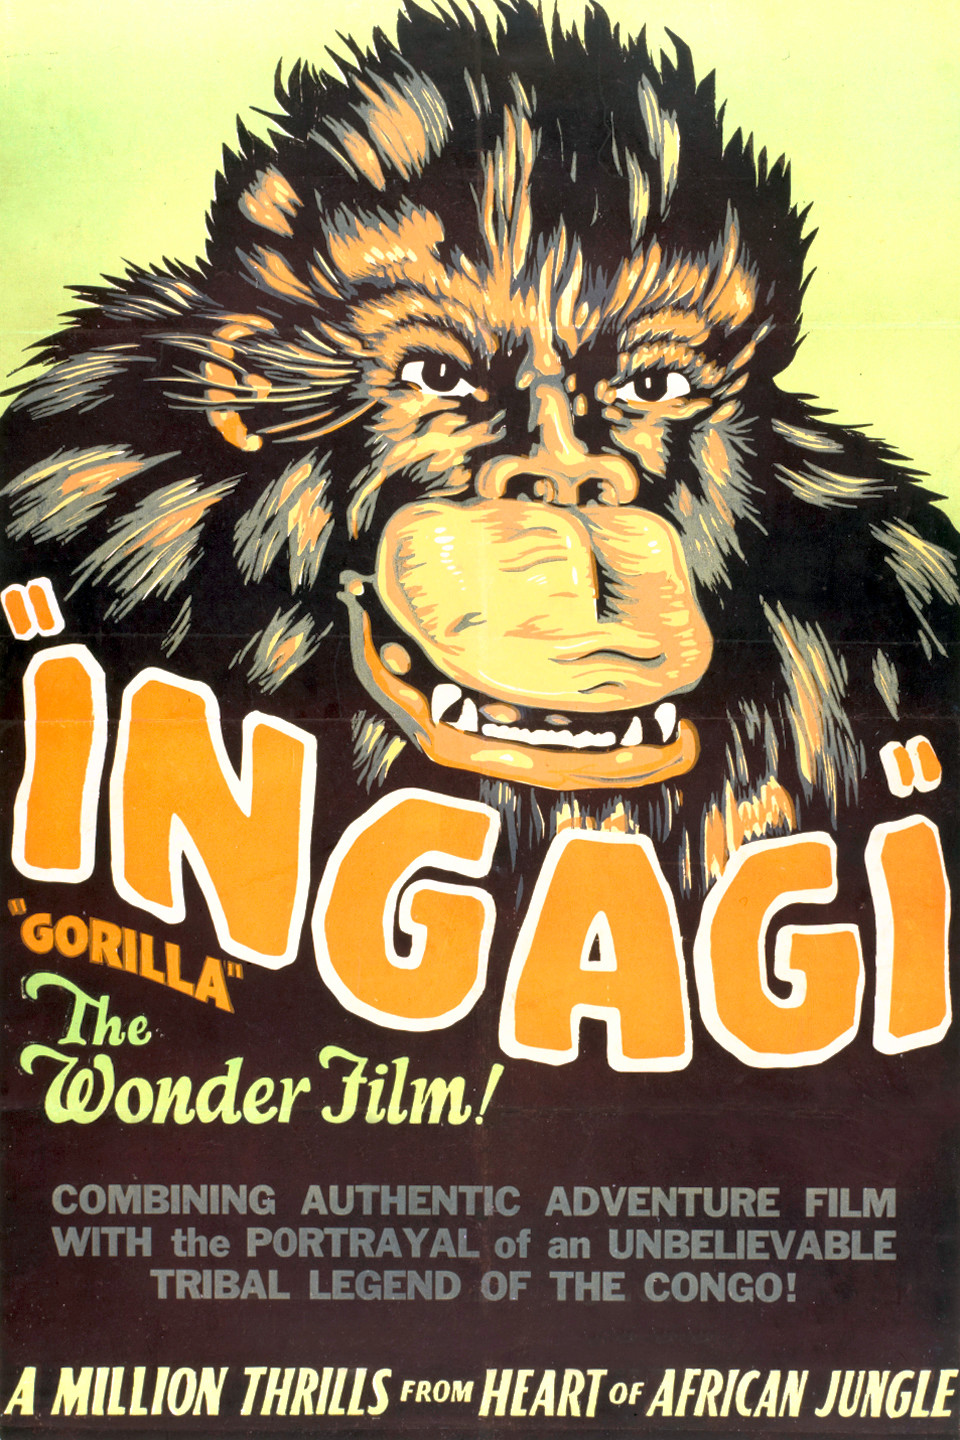 Ingagi - Ingagi (found Pre-Code exploitation film; 1930)